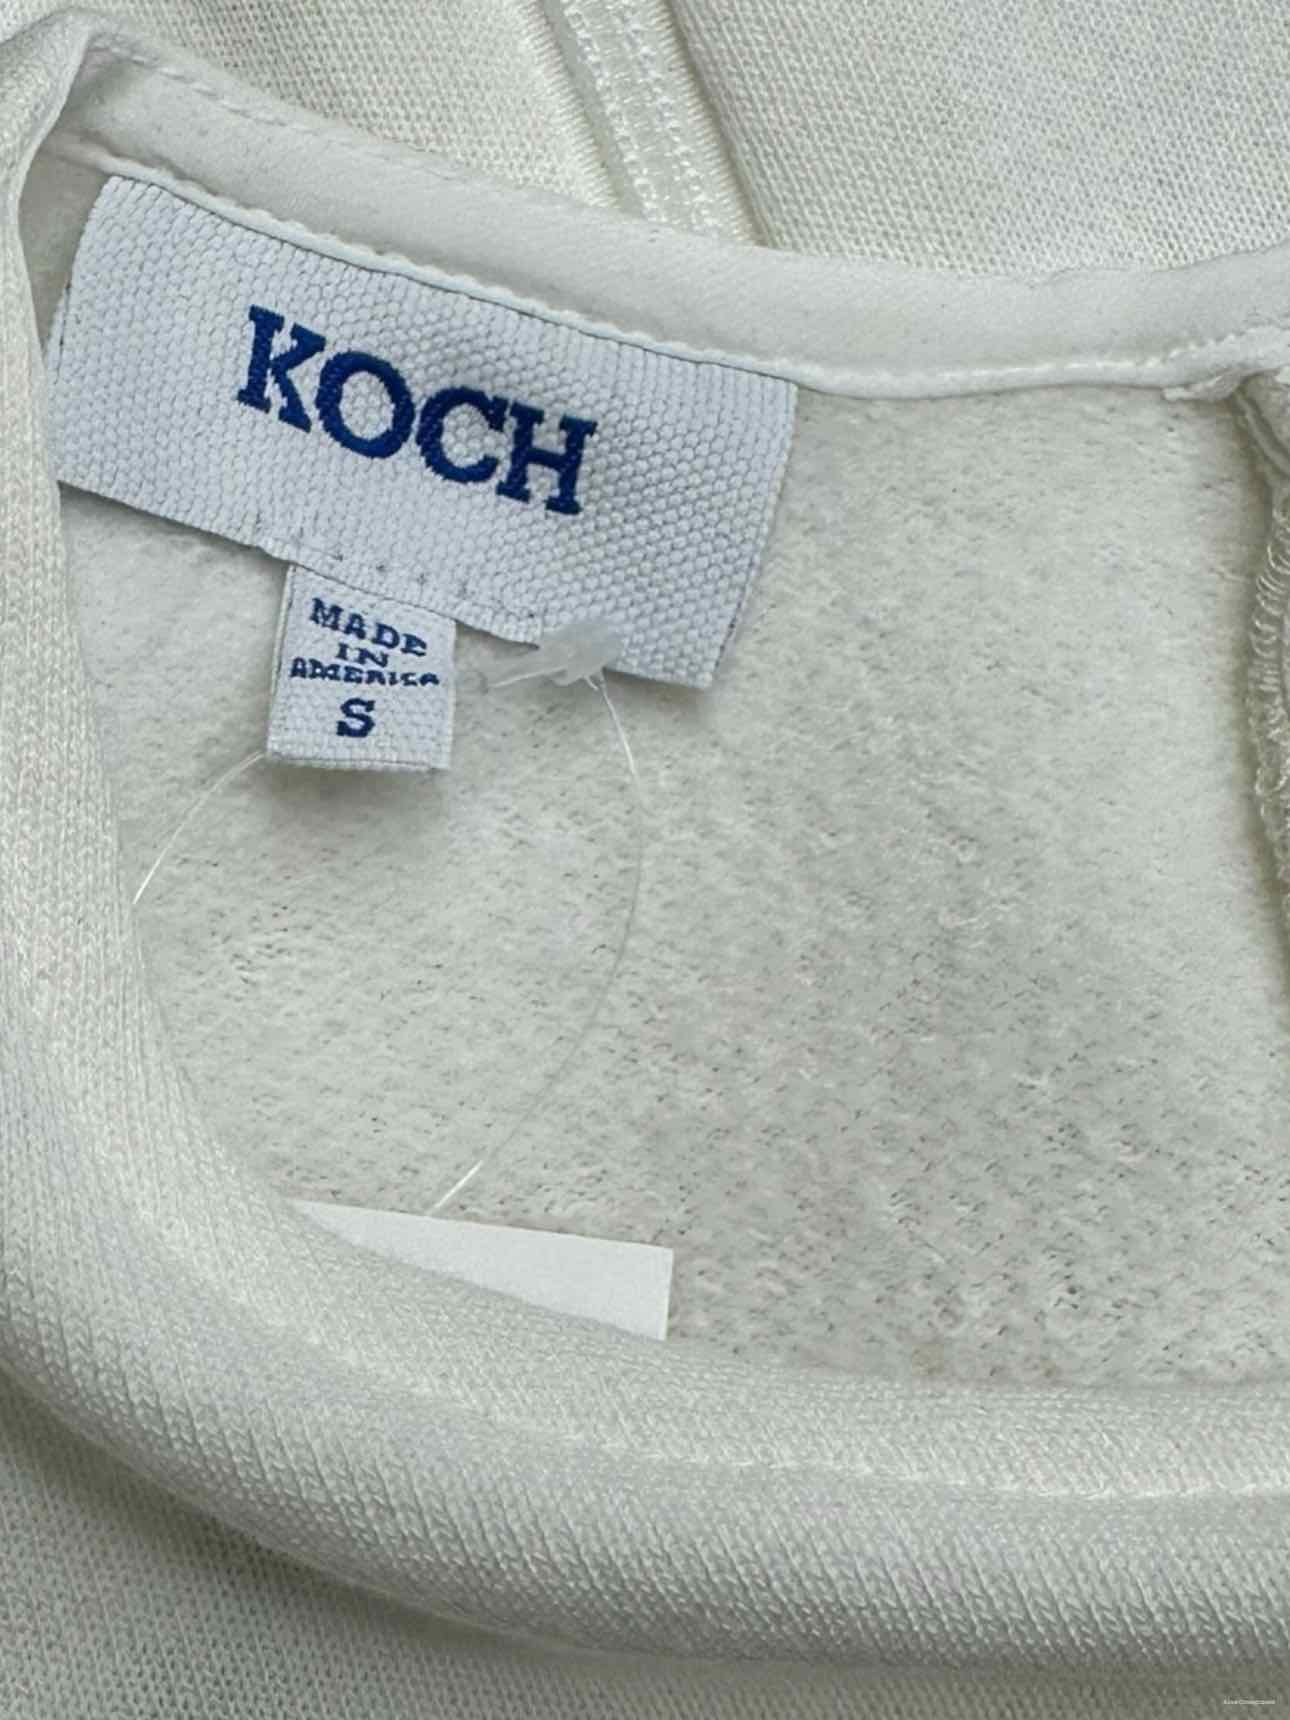 KOCH Cream 100% Cotton Knit Top Size S